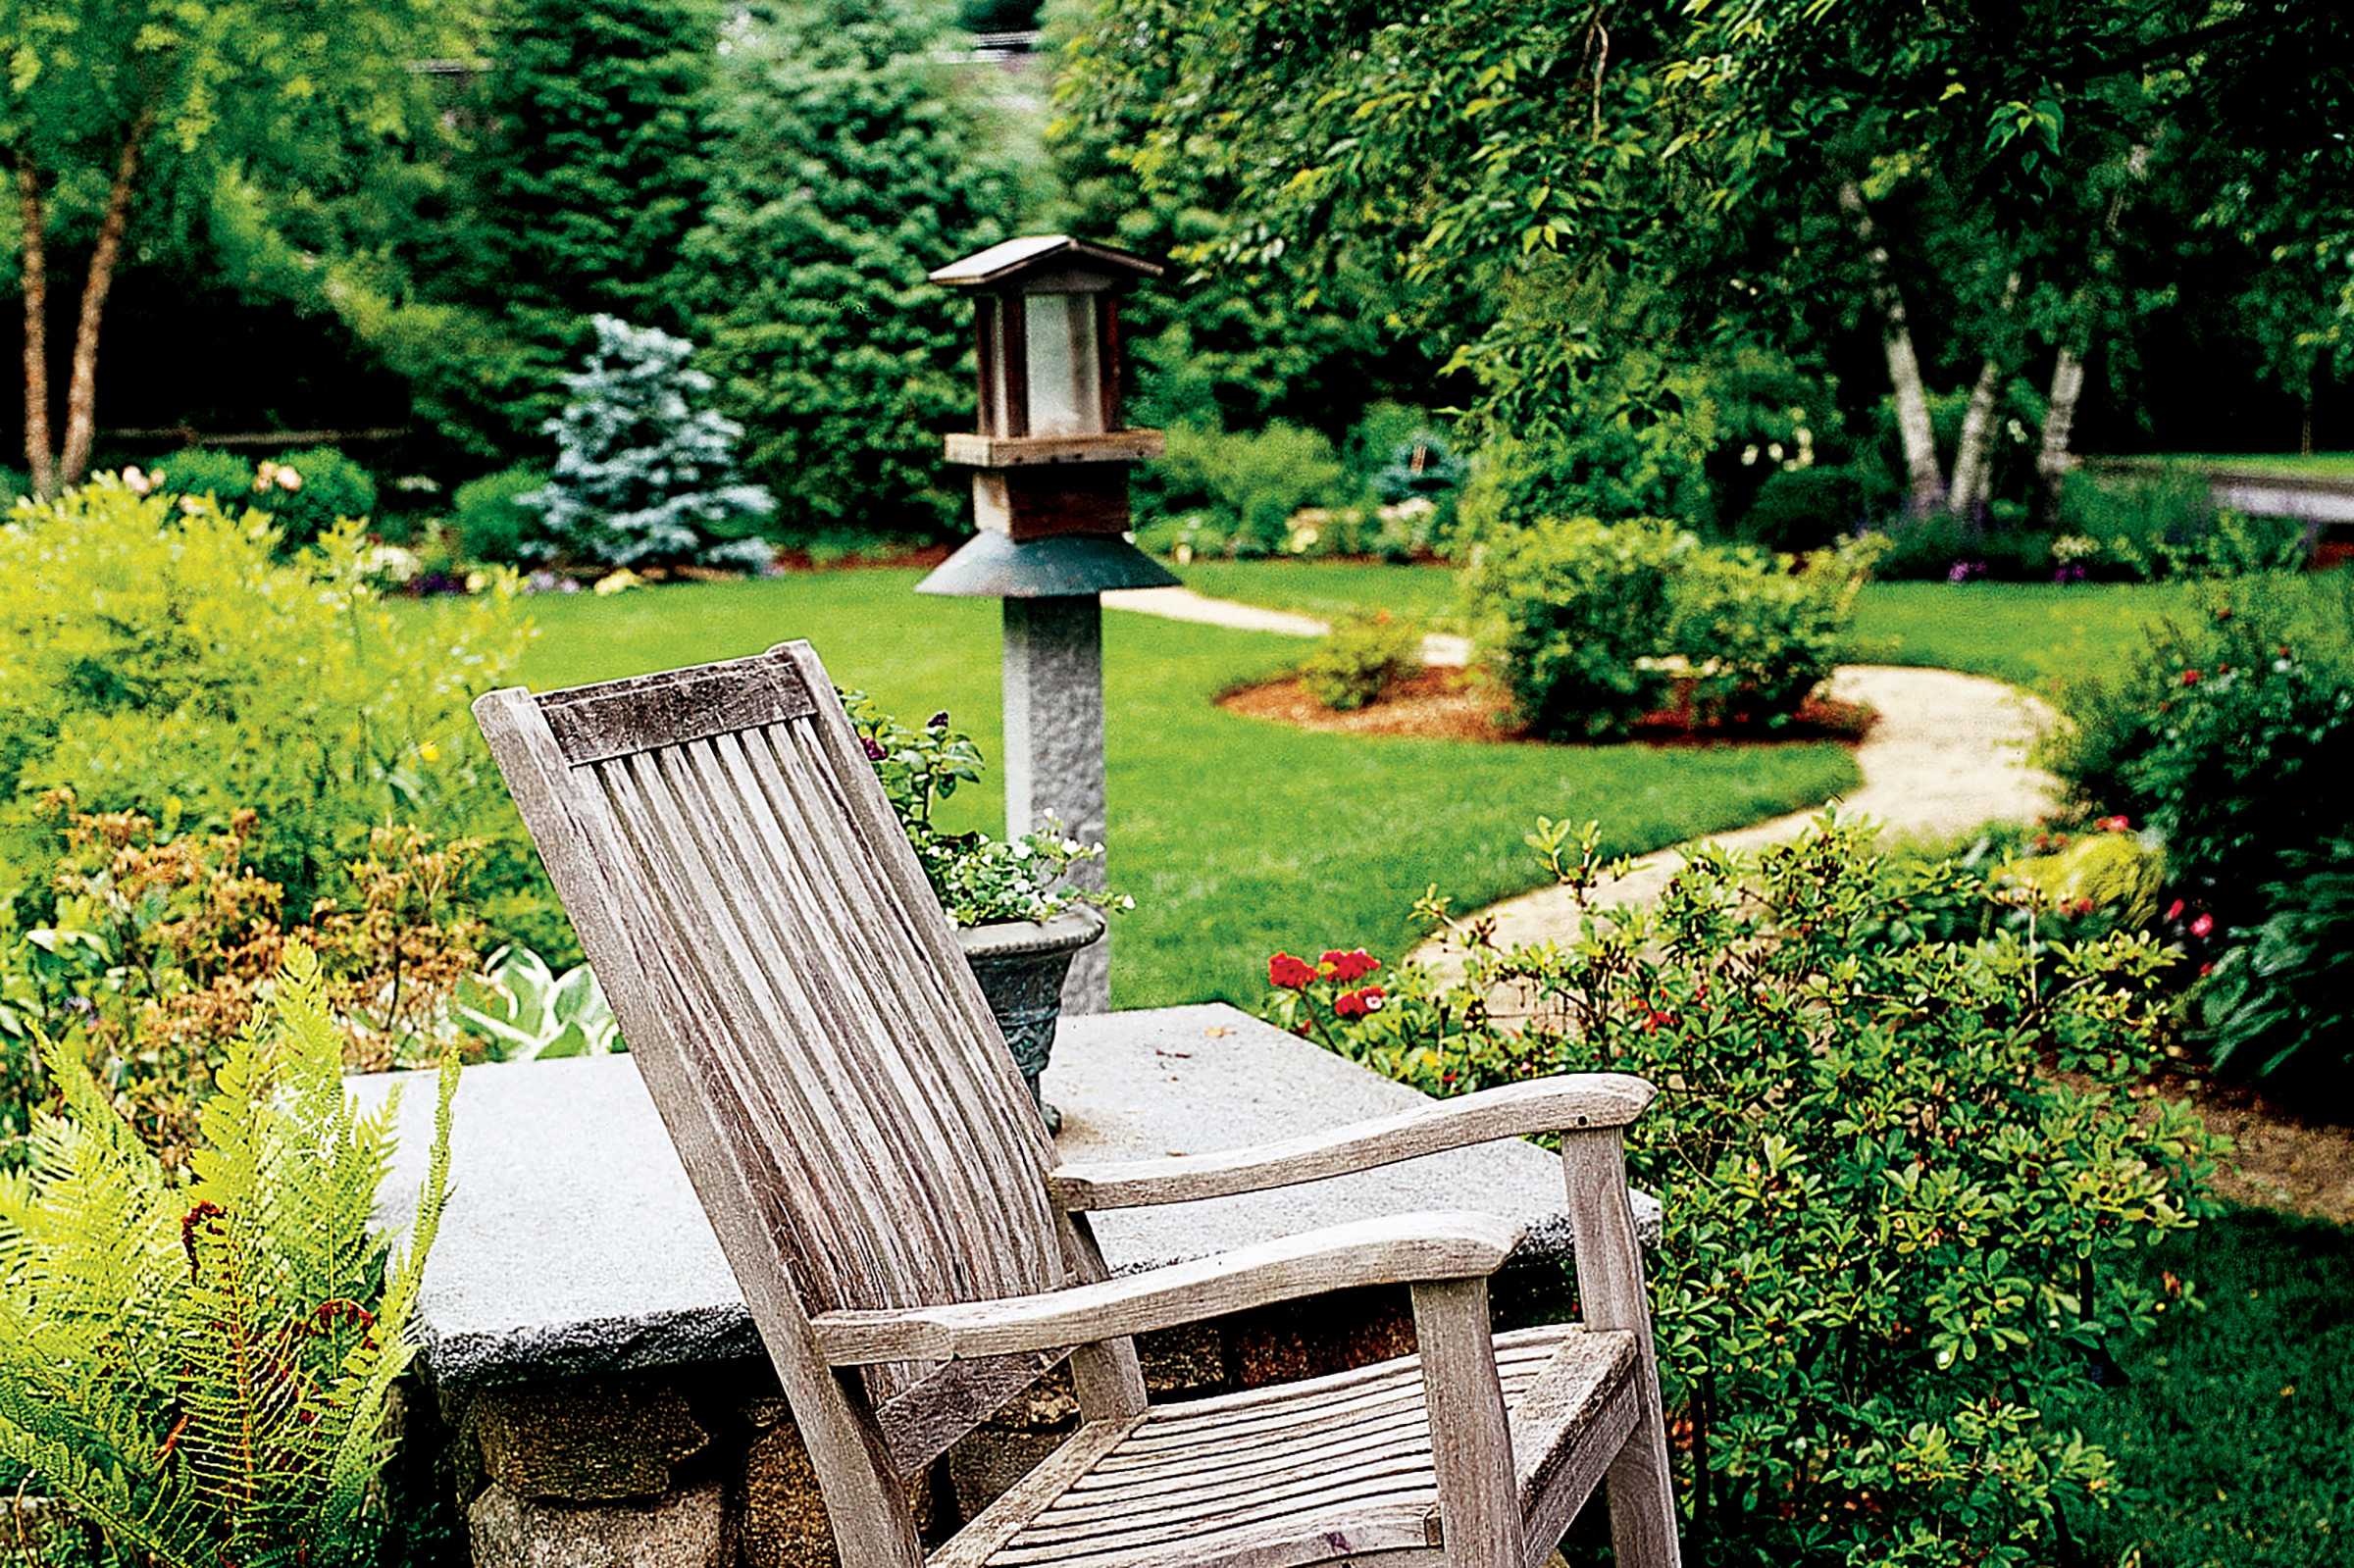 Wooden chair in backyard garden